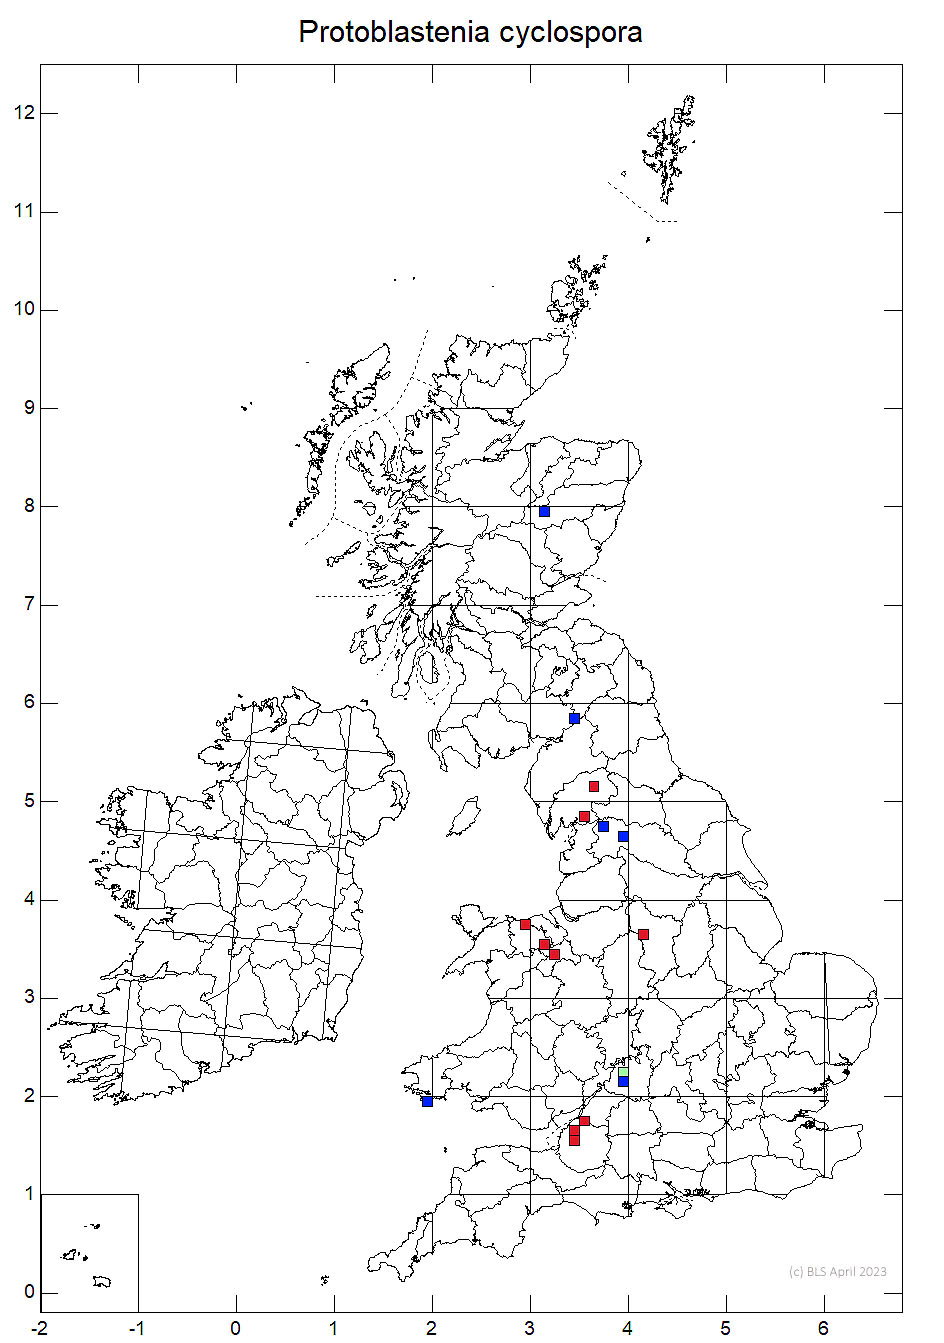 Protoblastenia cyclospora 10km sq distribution map